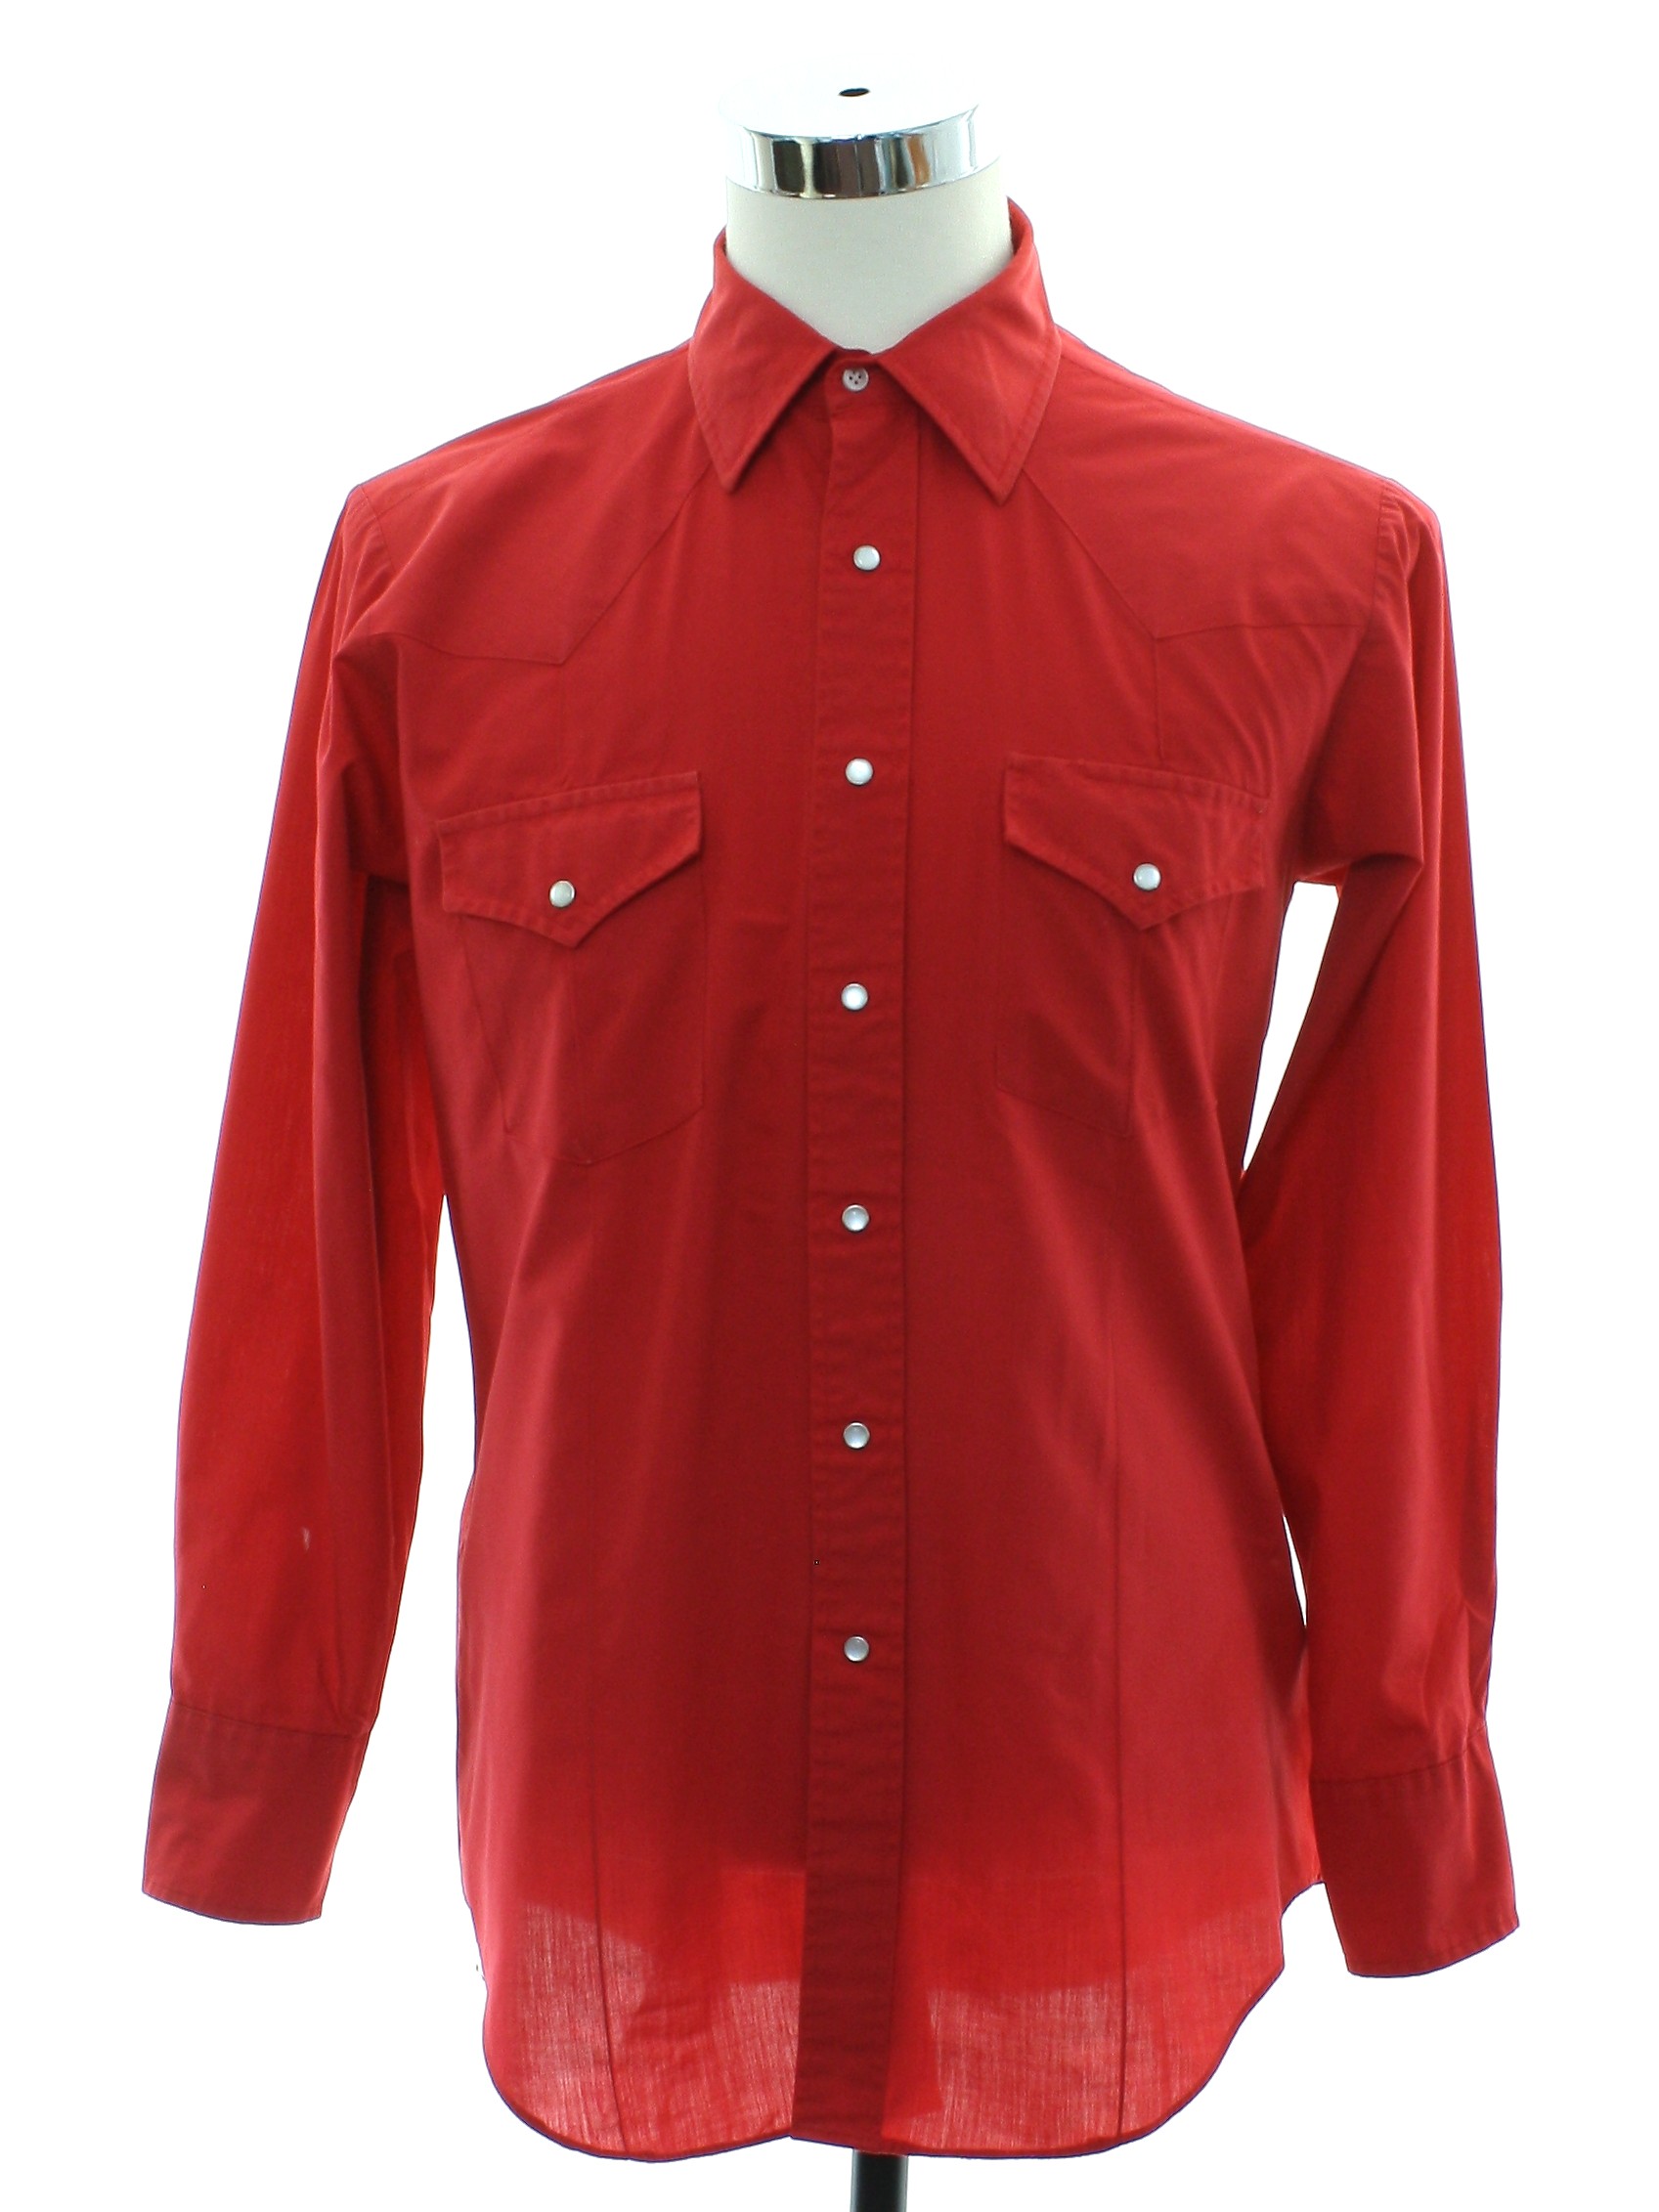 Retro 80s Western Shirt (Shepler) : 80s -Shepler- Mens red cotton ...